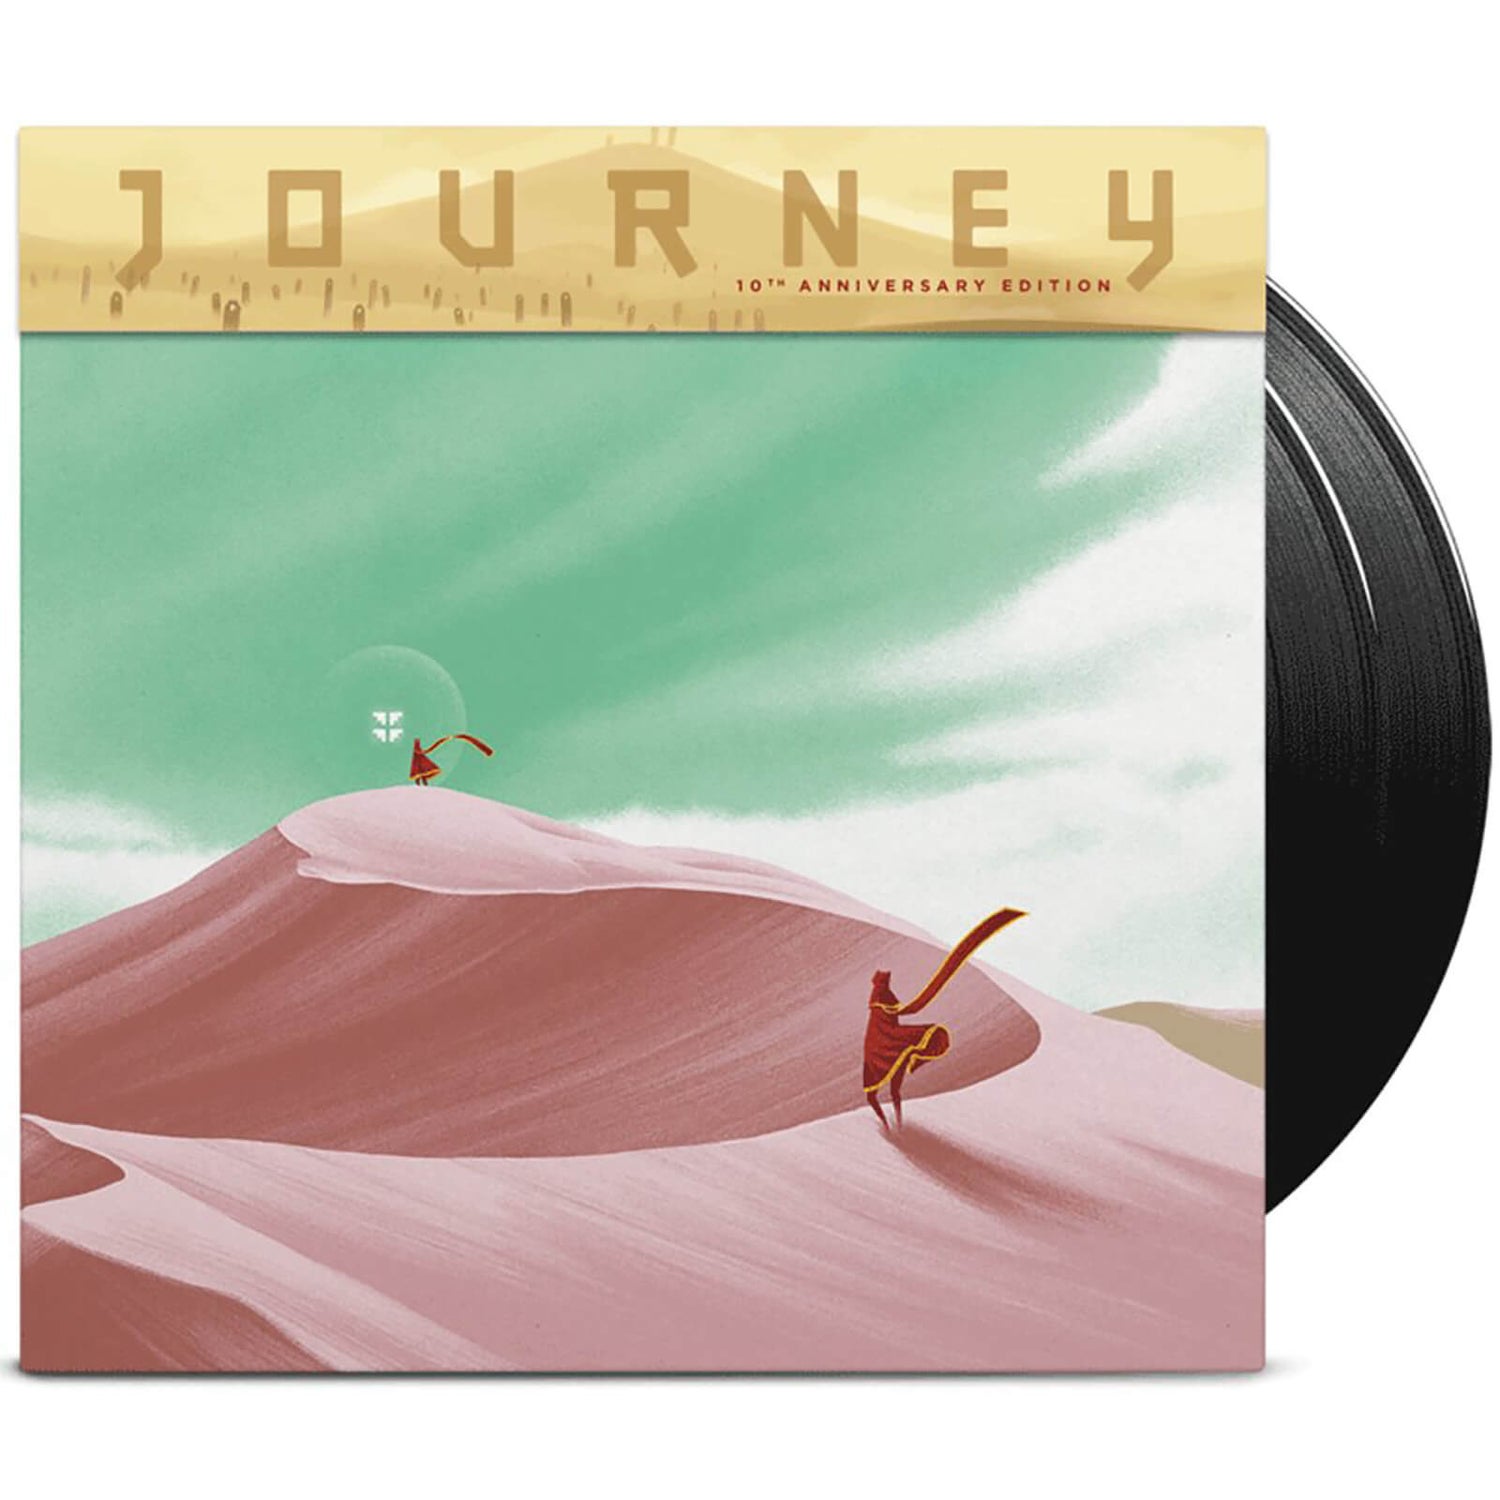 iam8bit - Journey Soundtrack 10th Anniversary Edition Vinyl 2LP